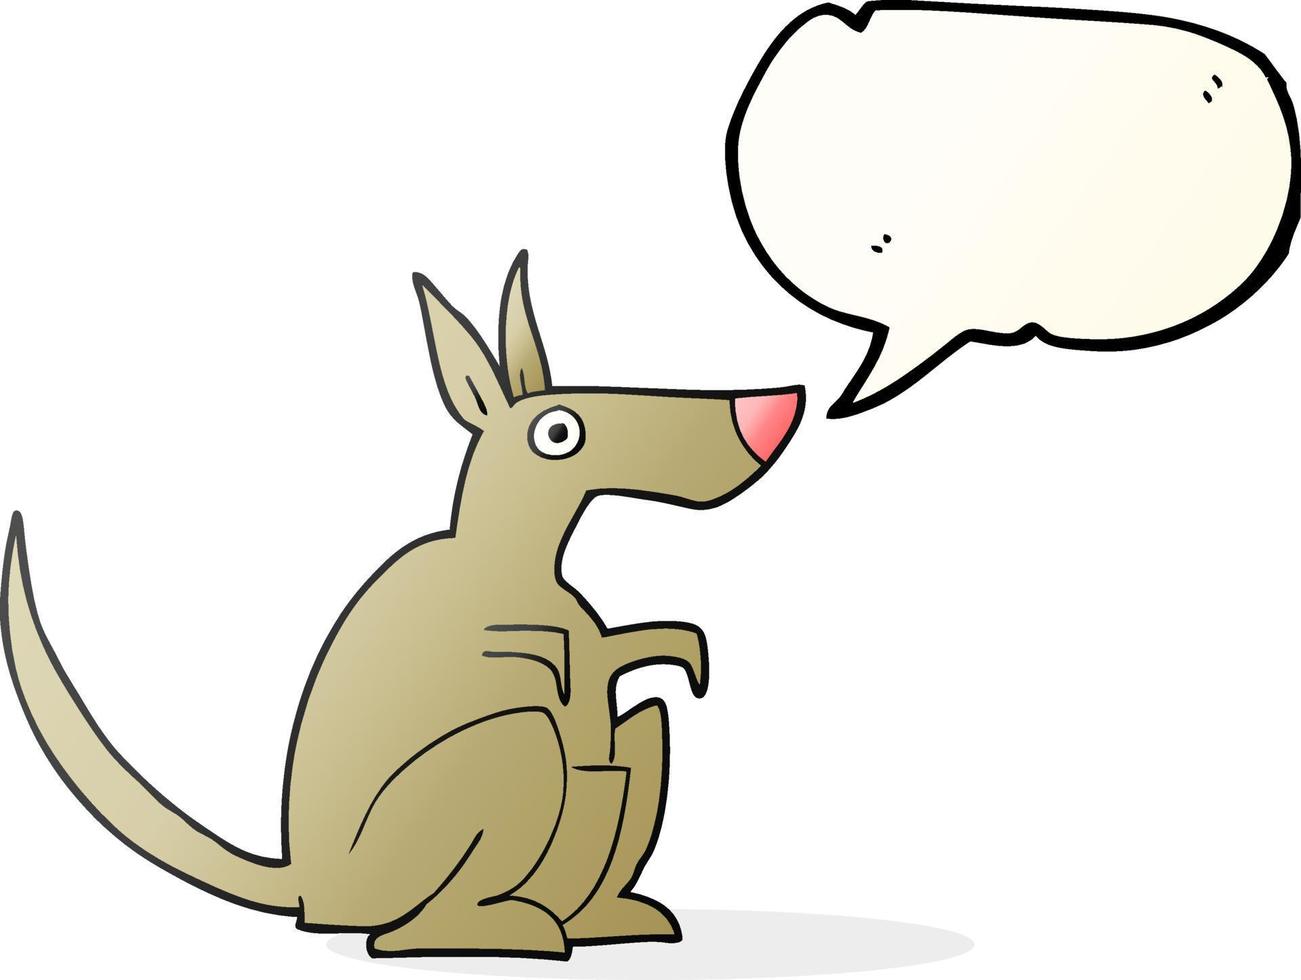 freehand drawn speech bubble cartoon kangaroo vector